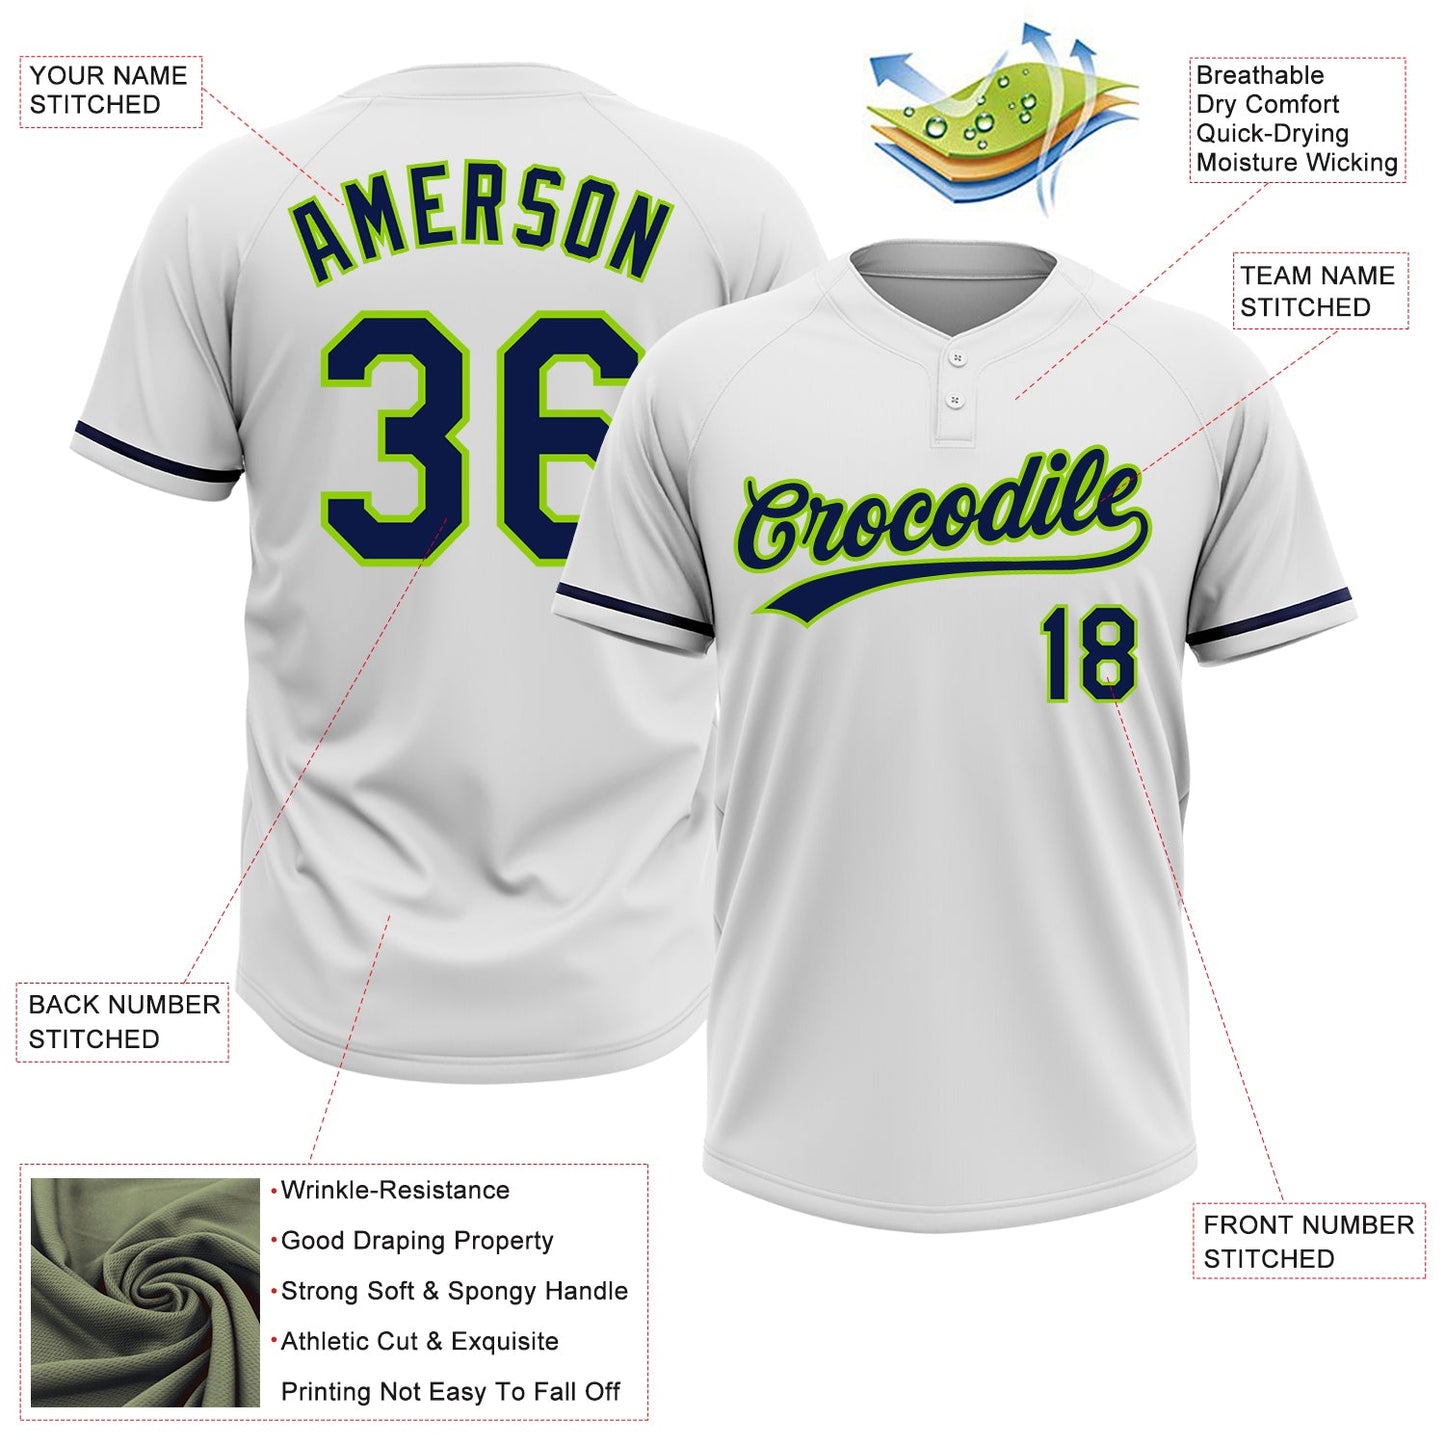 Custom White Navy-Neon Green Two-Button Unisex Softball Jersey